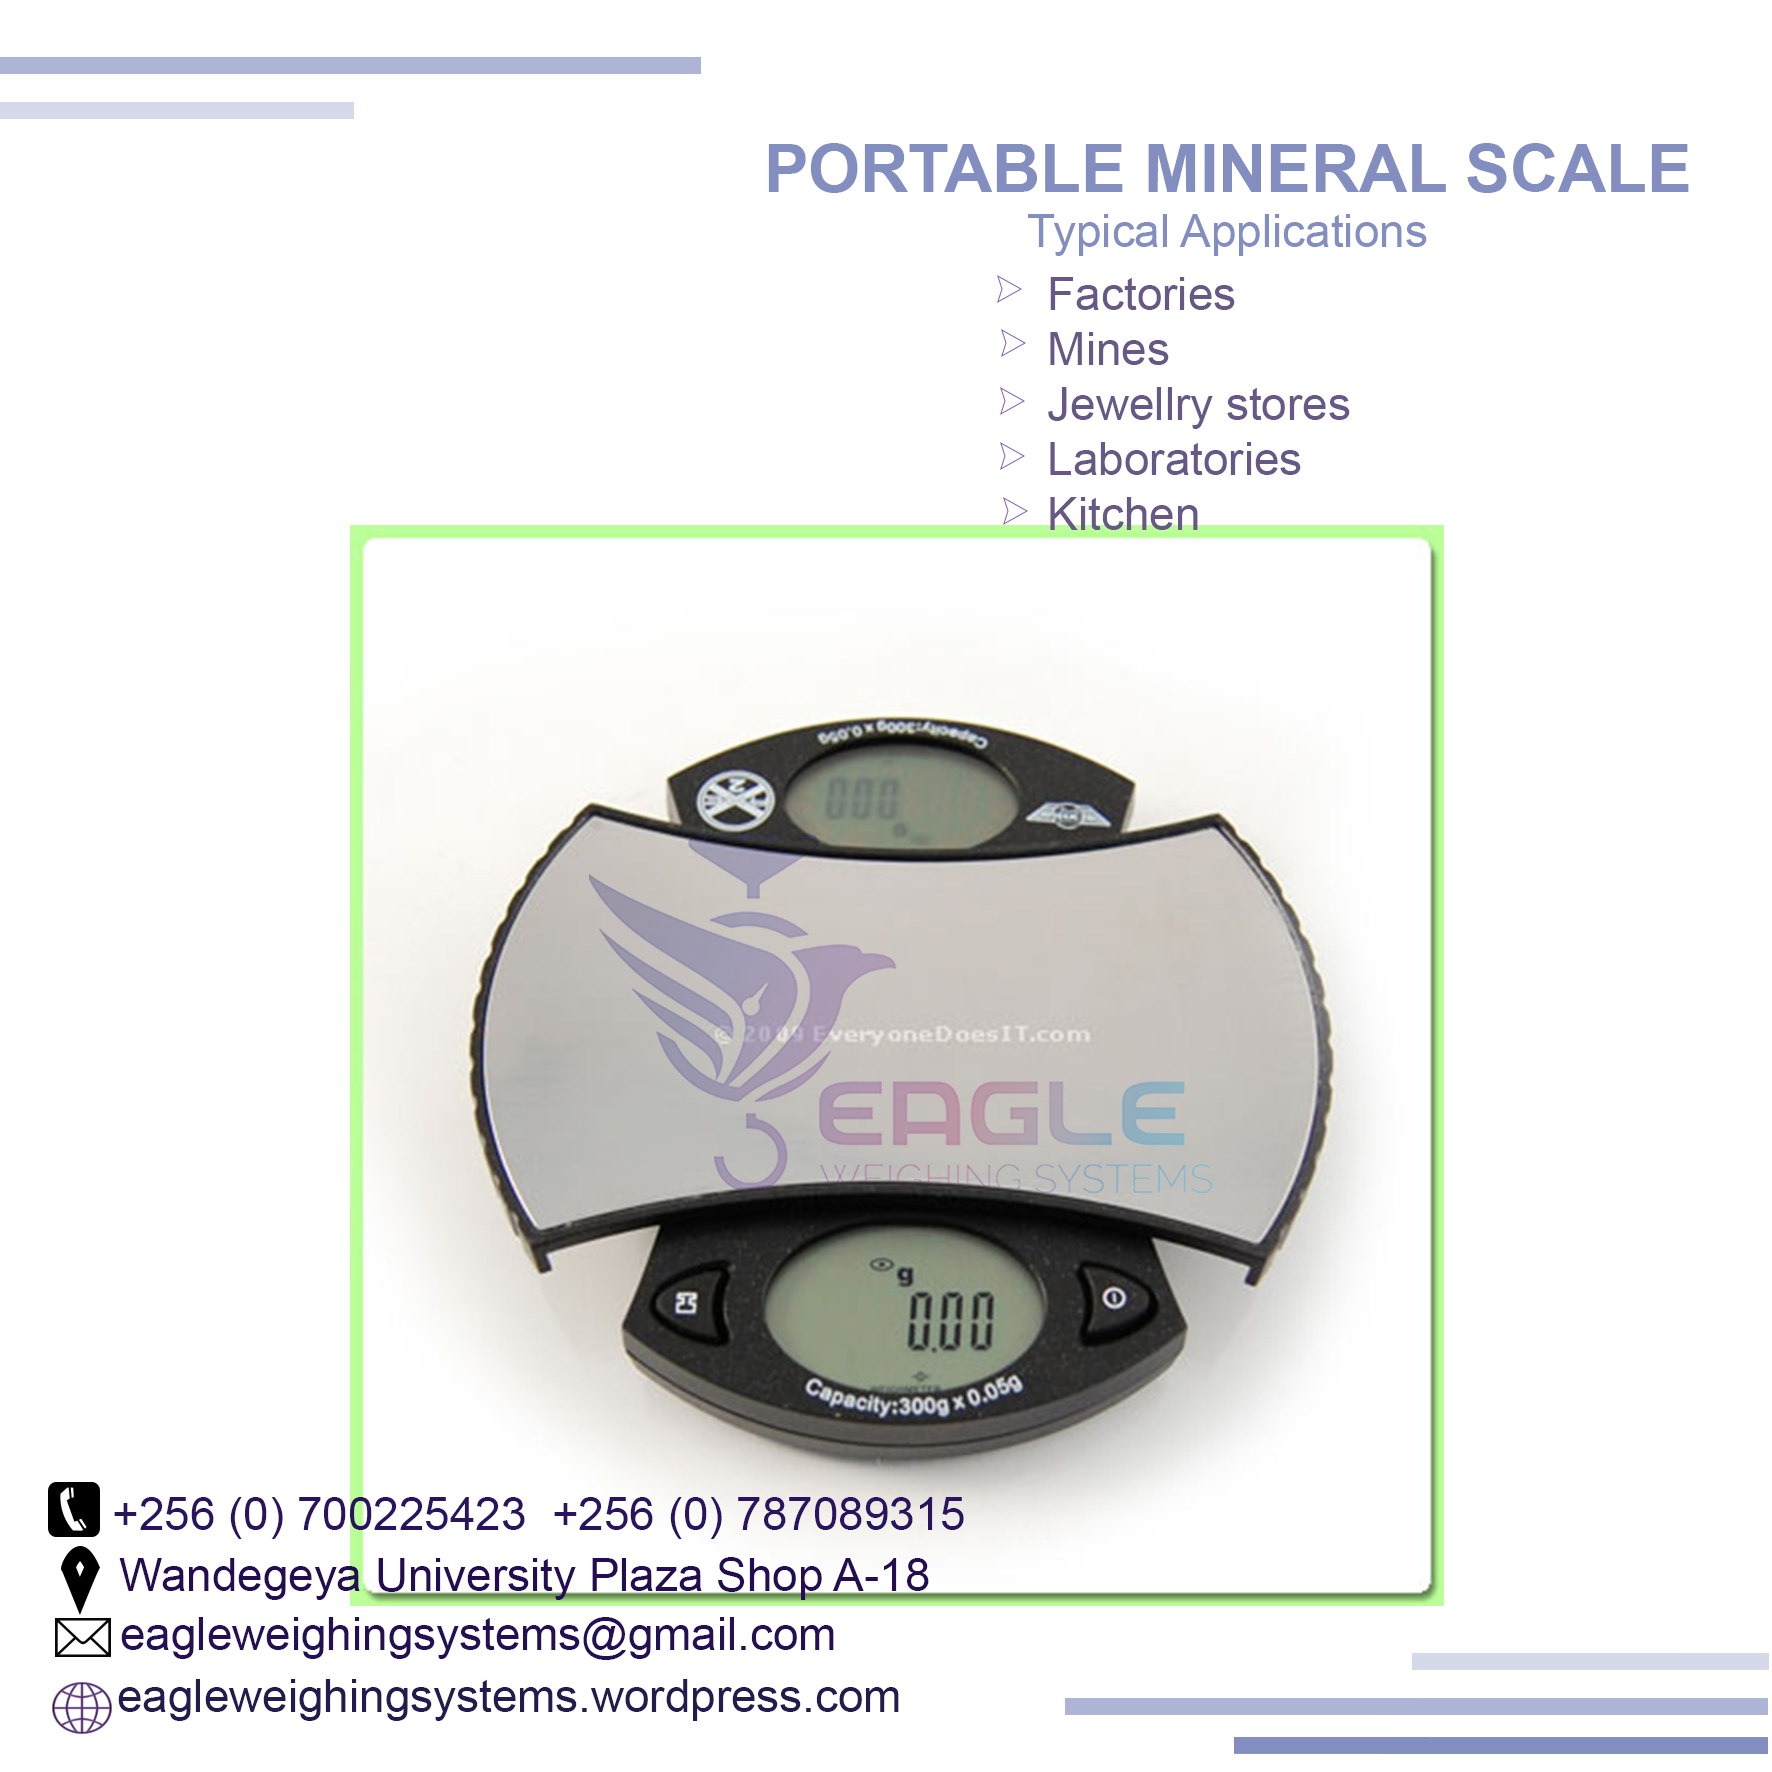 Wholesale Portable mineral, jewelry scales in Kampala Uganda, Kampala Central Division, Central, Uganda